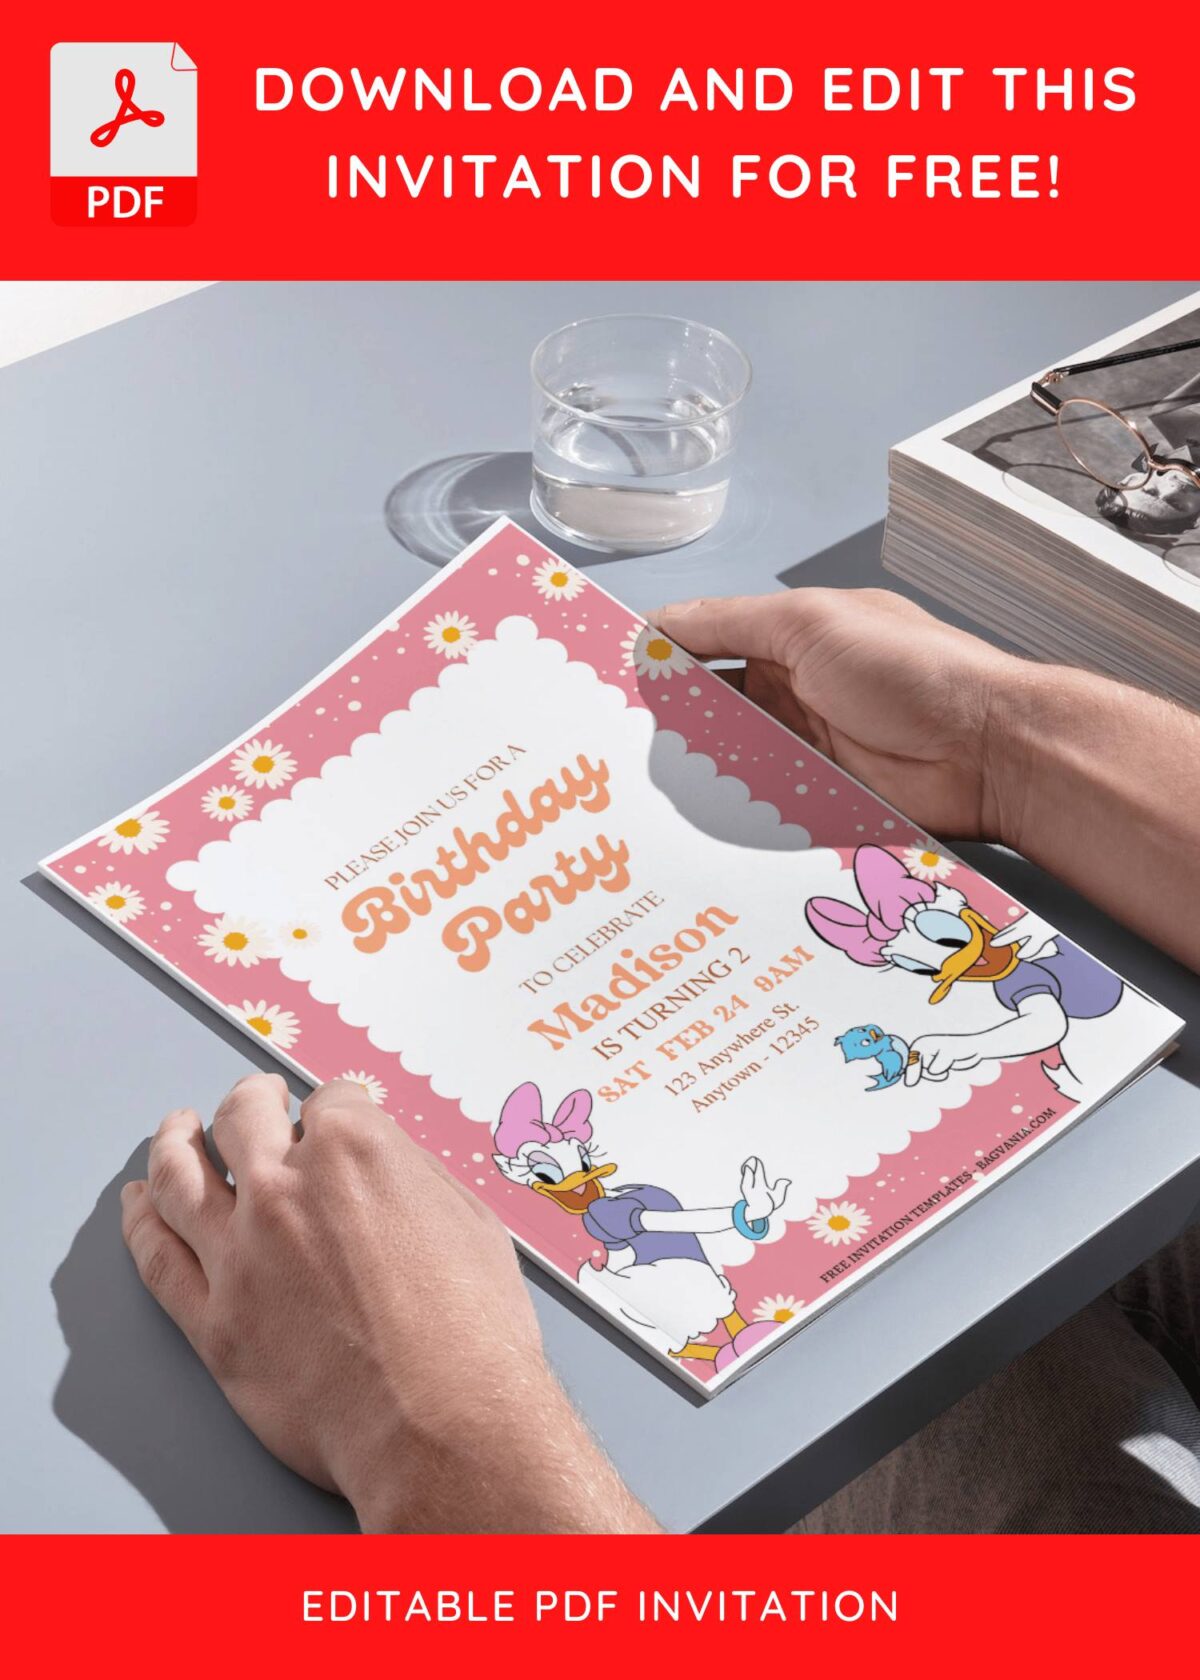 (Free Editable PDF) Playful Daisy Duck Birthday Invitation Templates H